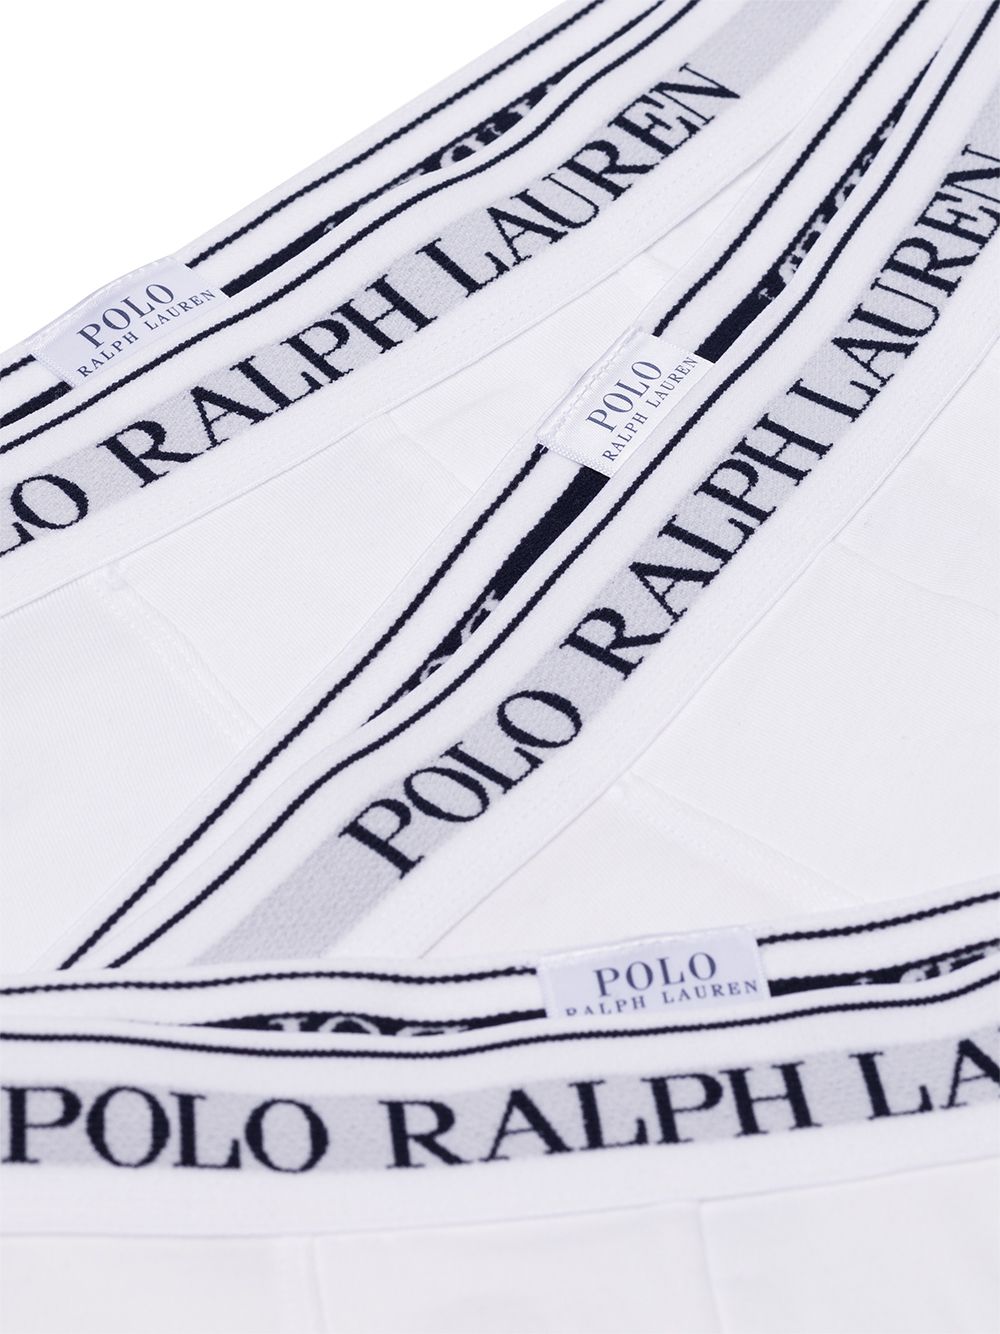 фото Polo ralph lauren комплект из трех трусов с логотипом